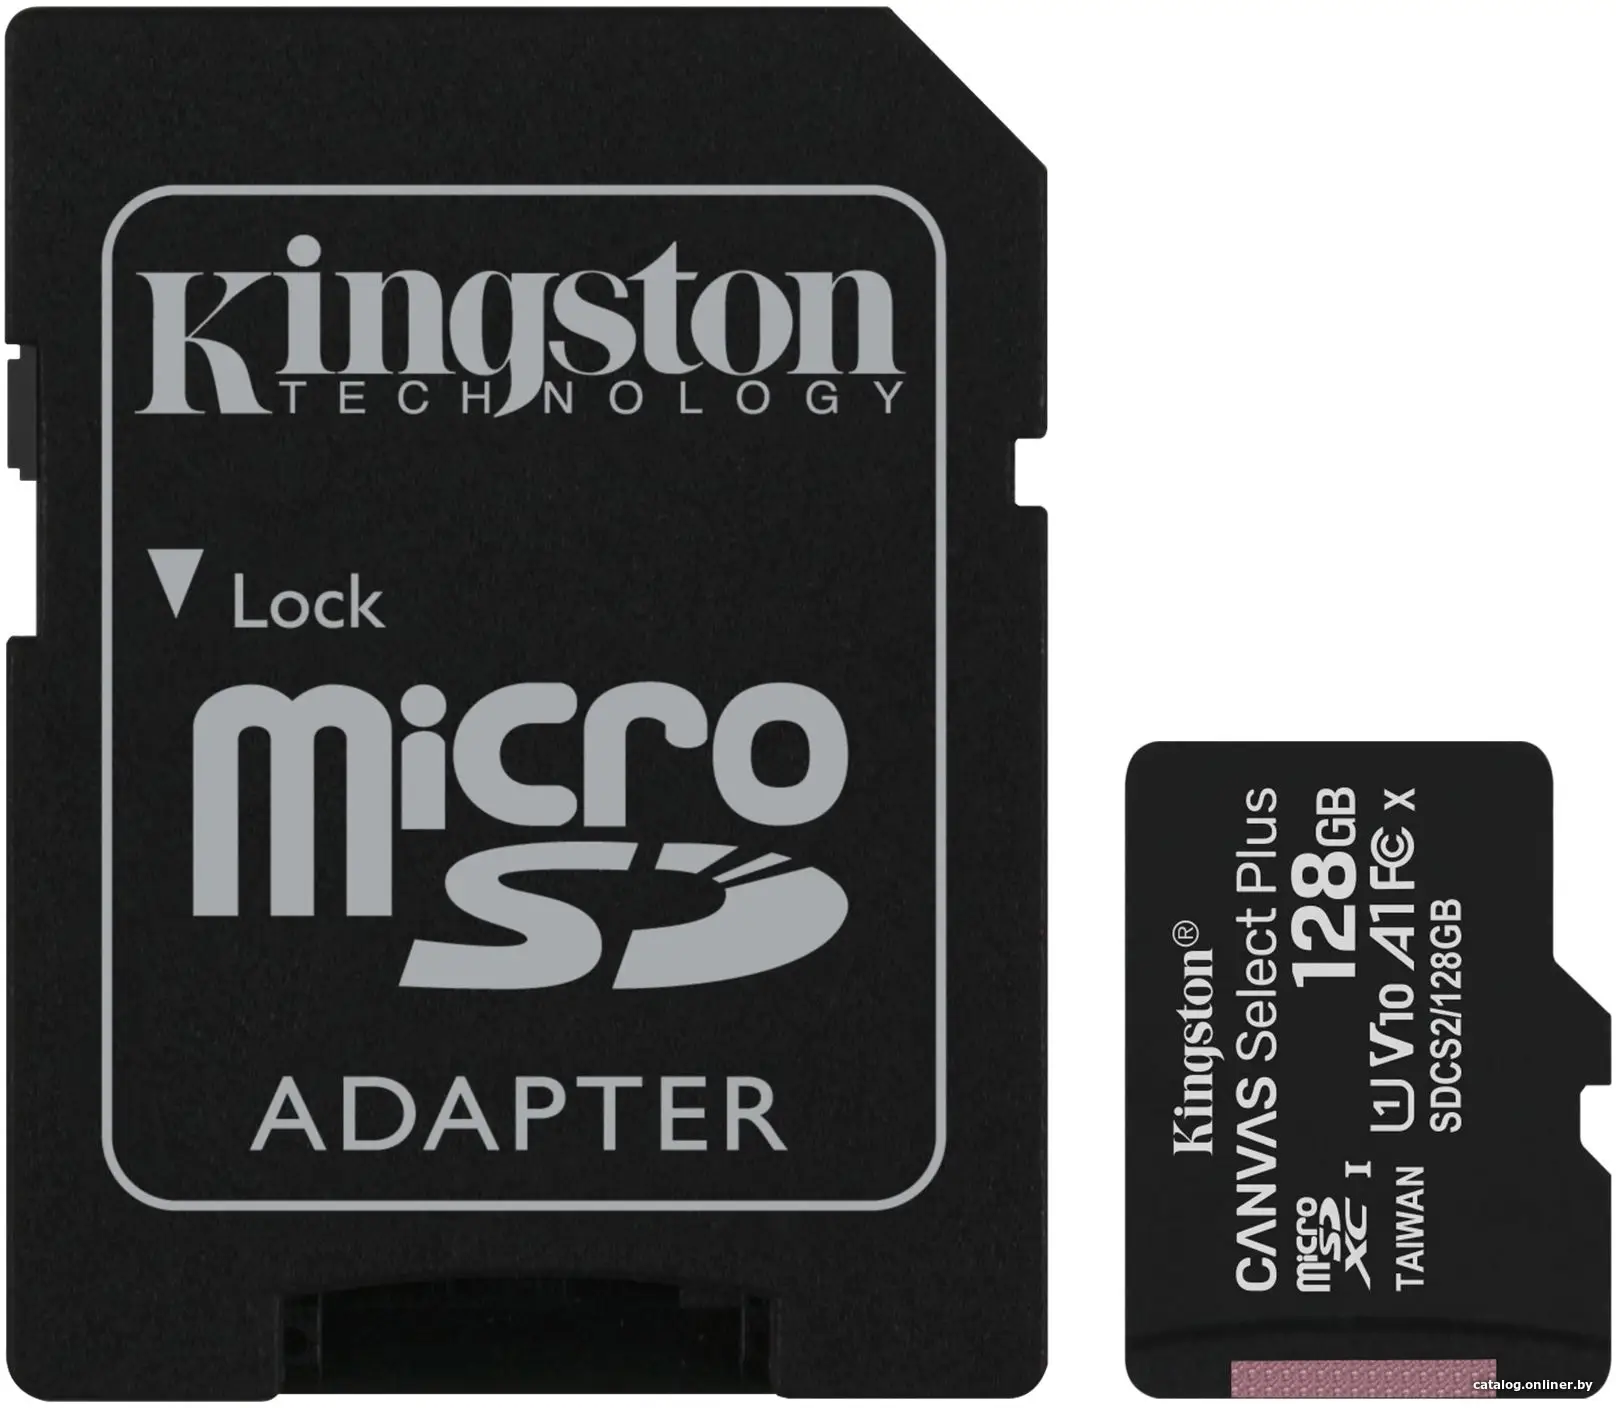 Купить Kingston 128GB micSDXC Canvas Select Plus 100R A1 C10 Card + ADP, EAN: 740617298703, цена, опт и розница